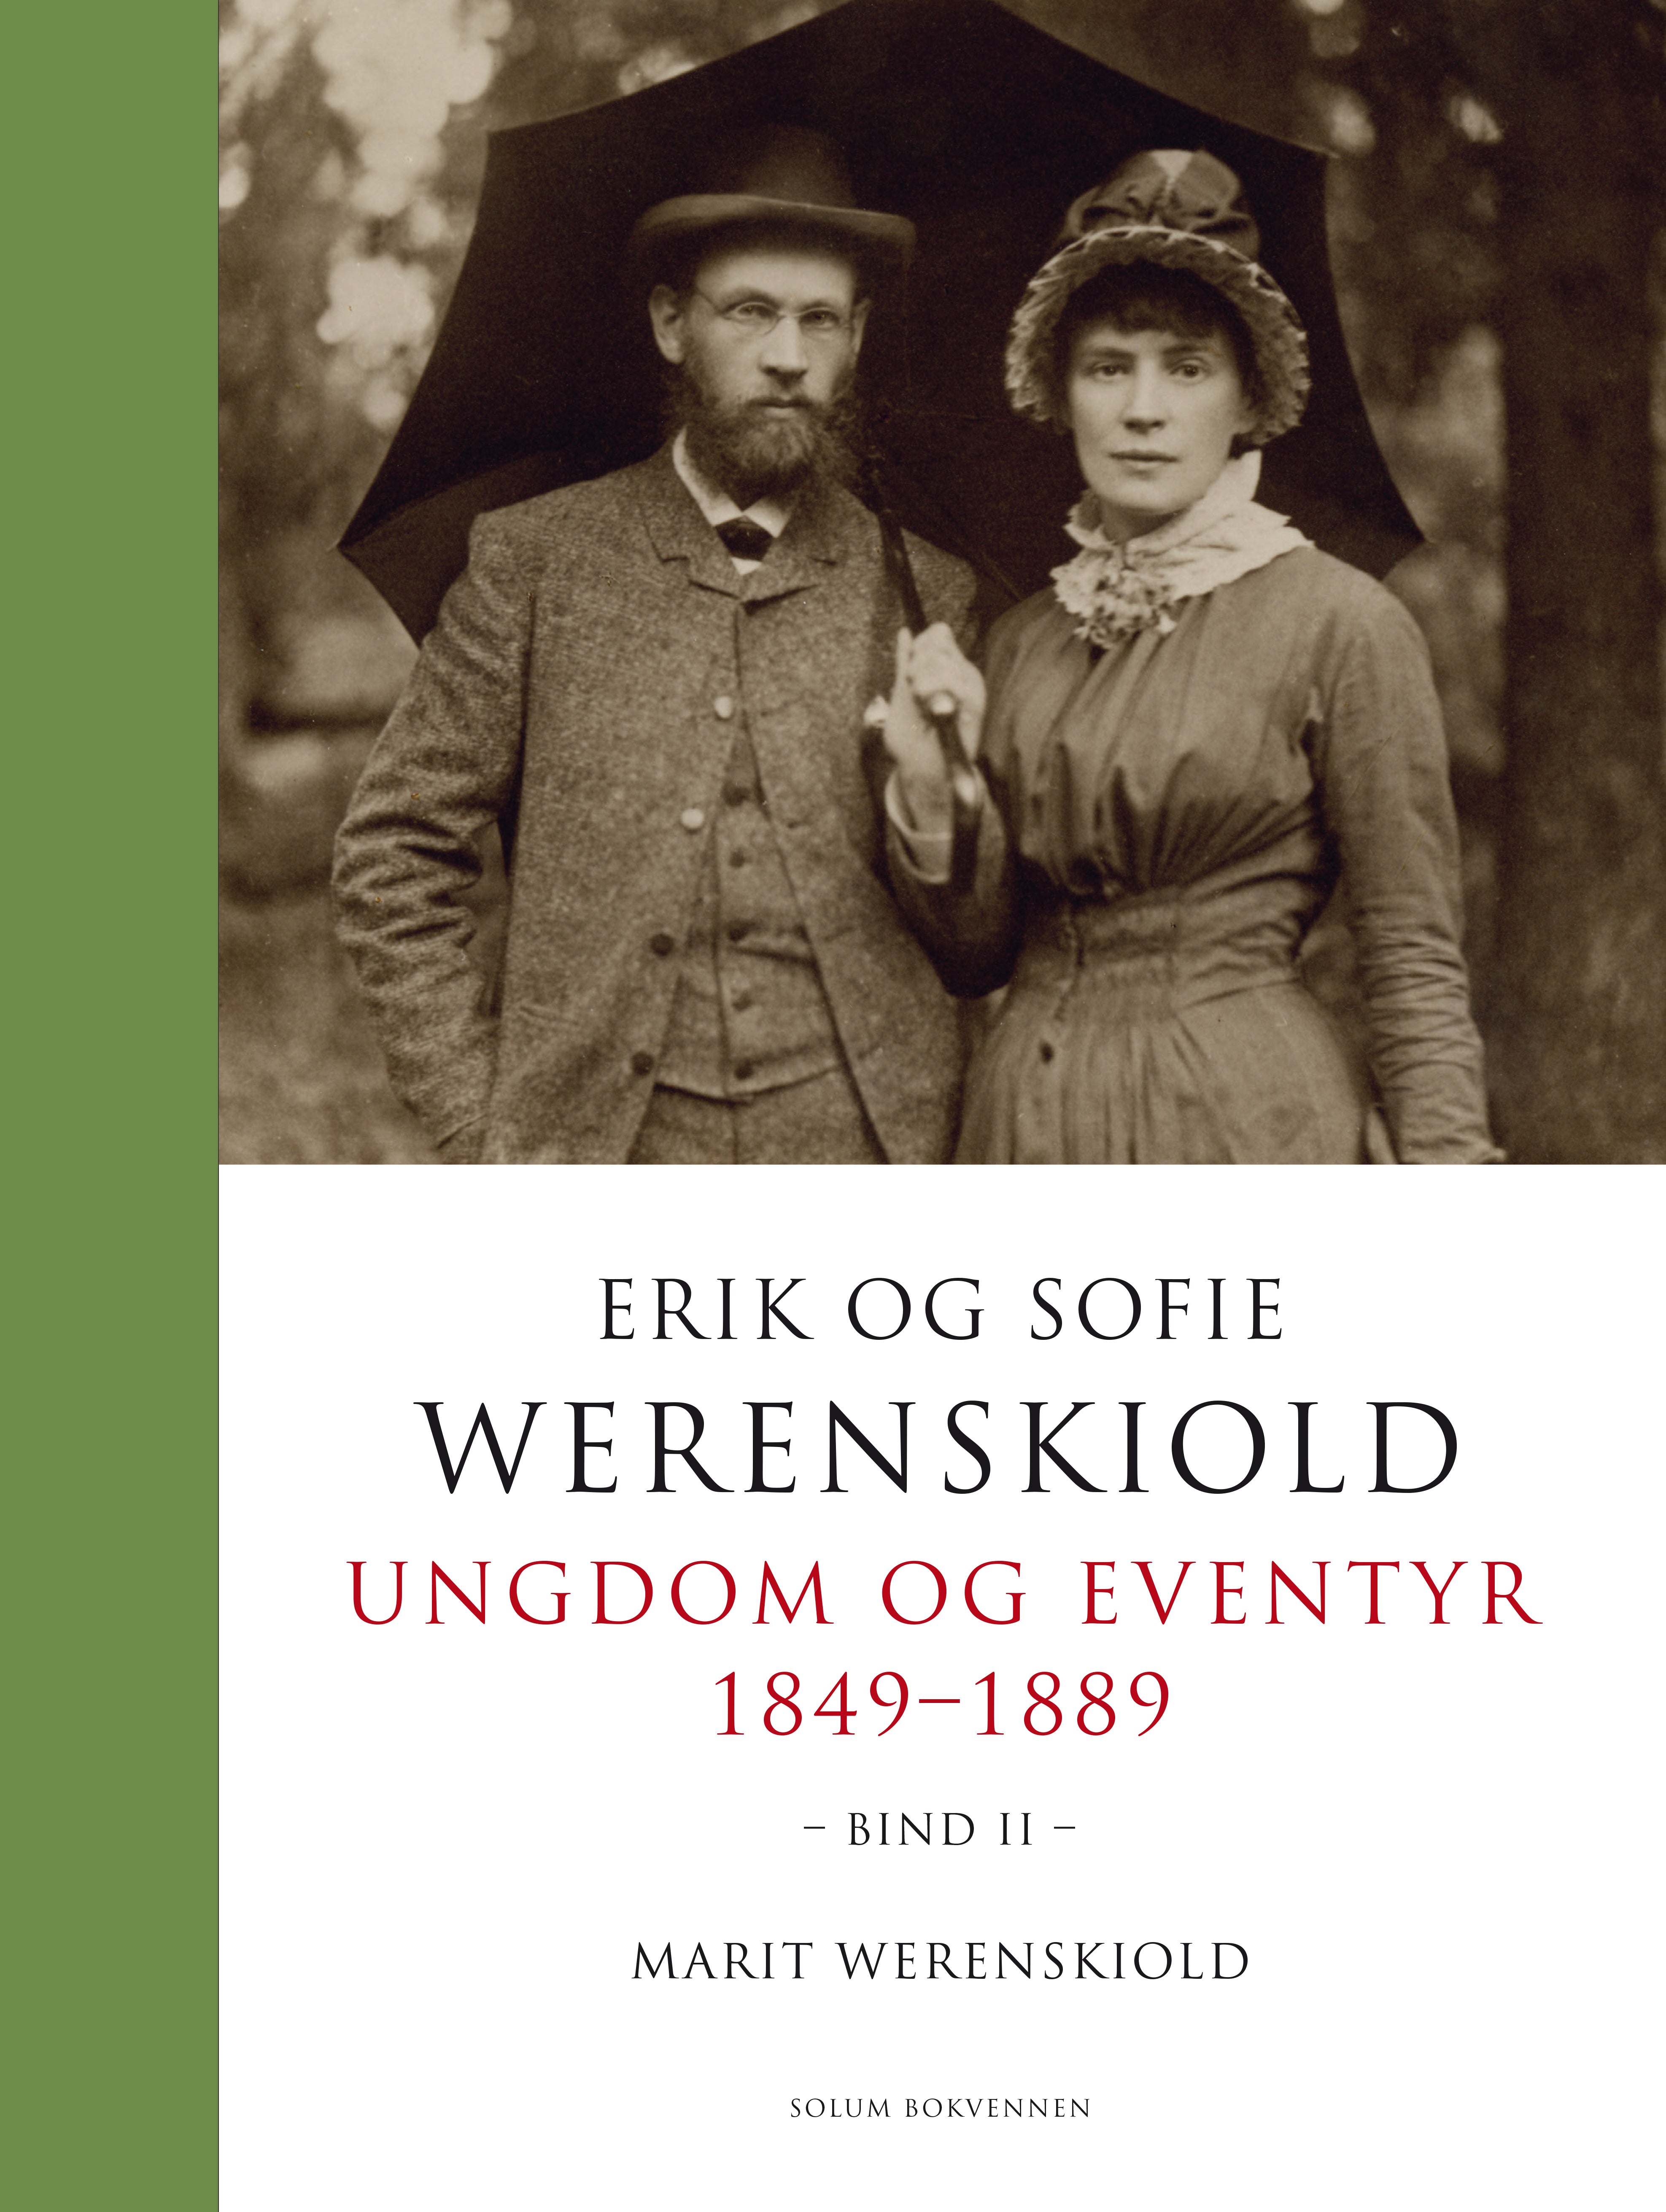 Erik og Sofie Werenskiold: Bind 2: ungdom og eventyr 1849-1889